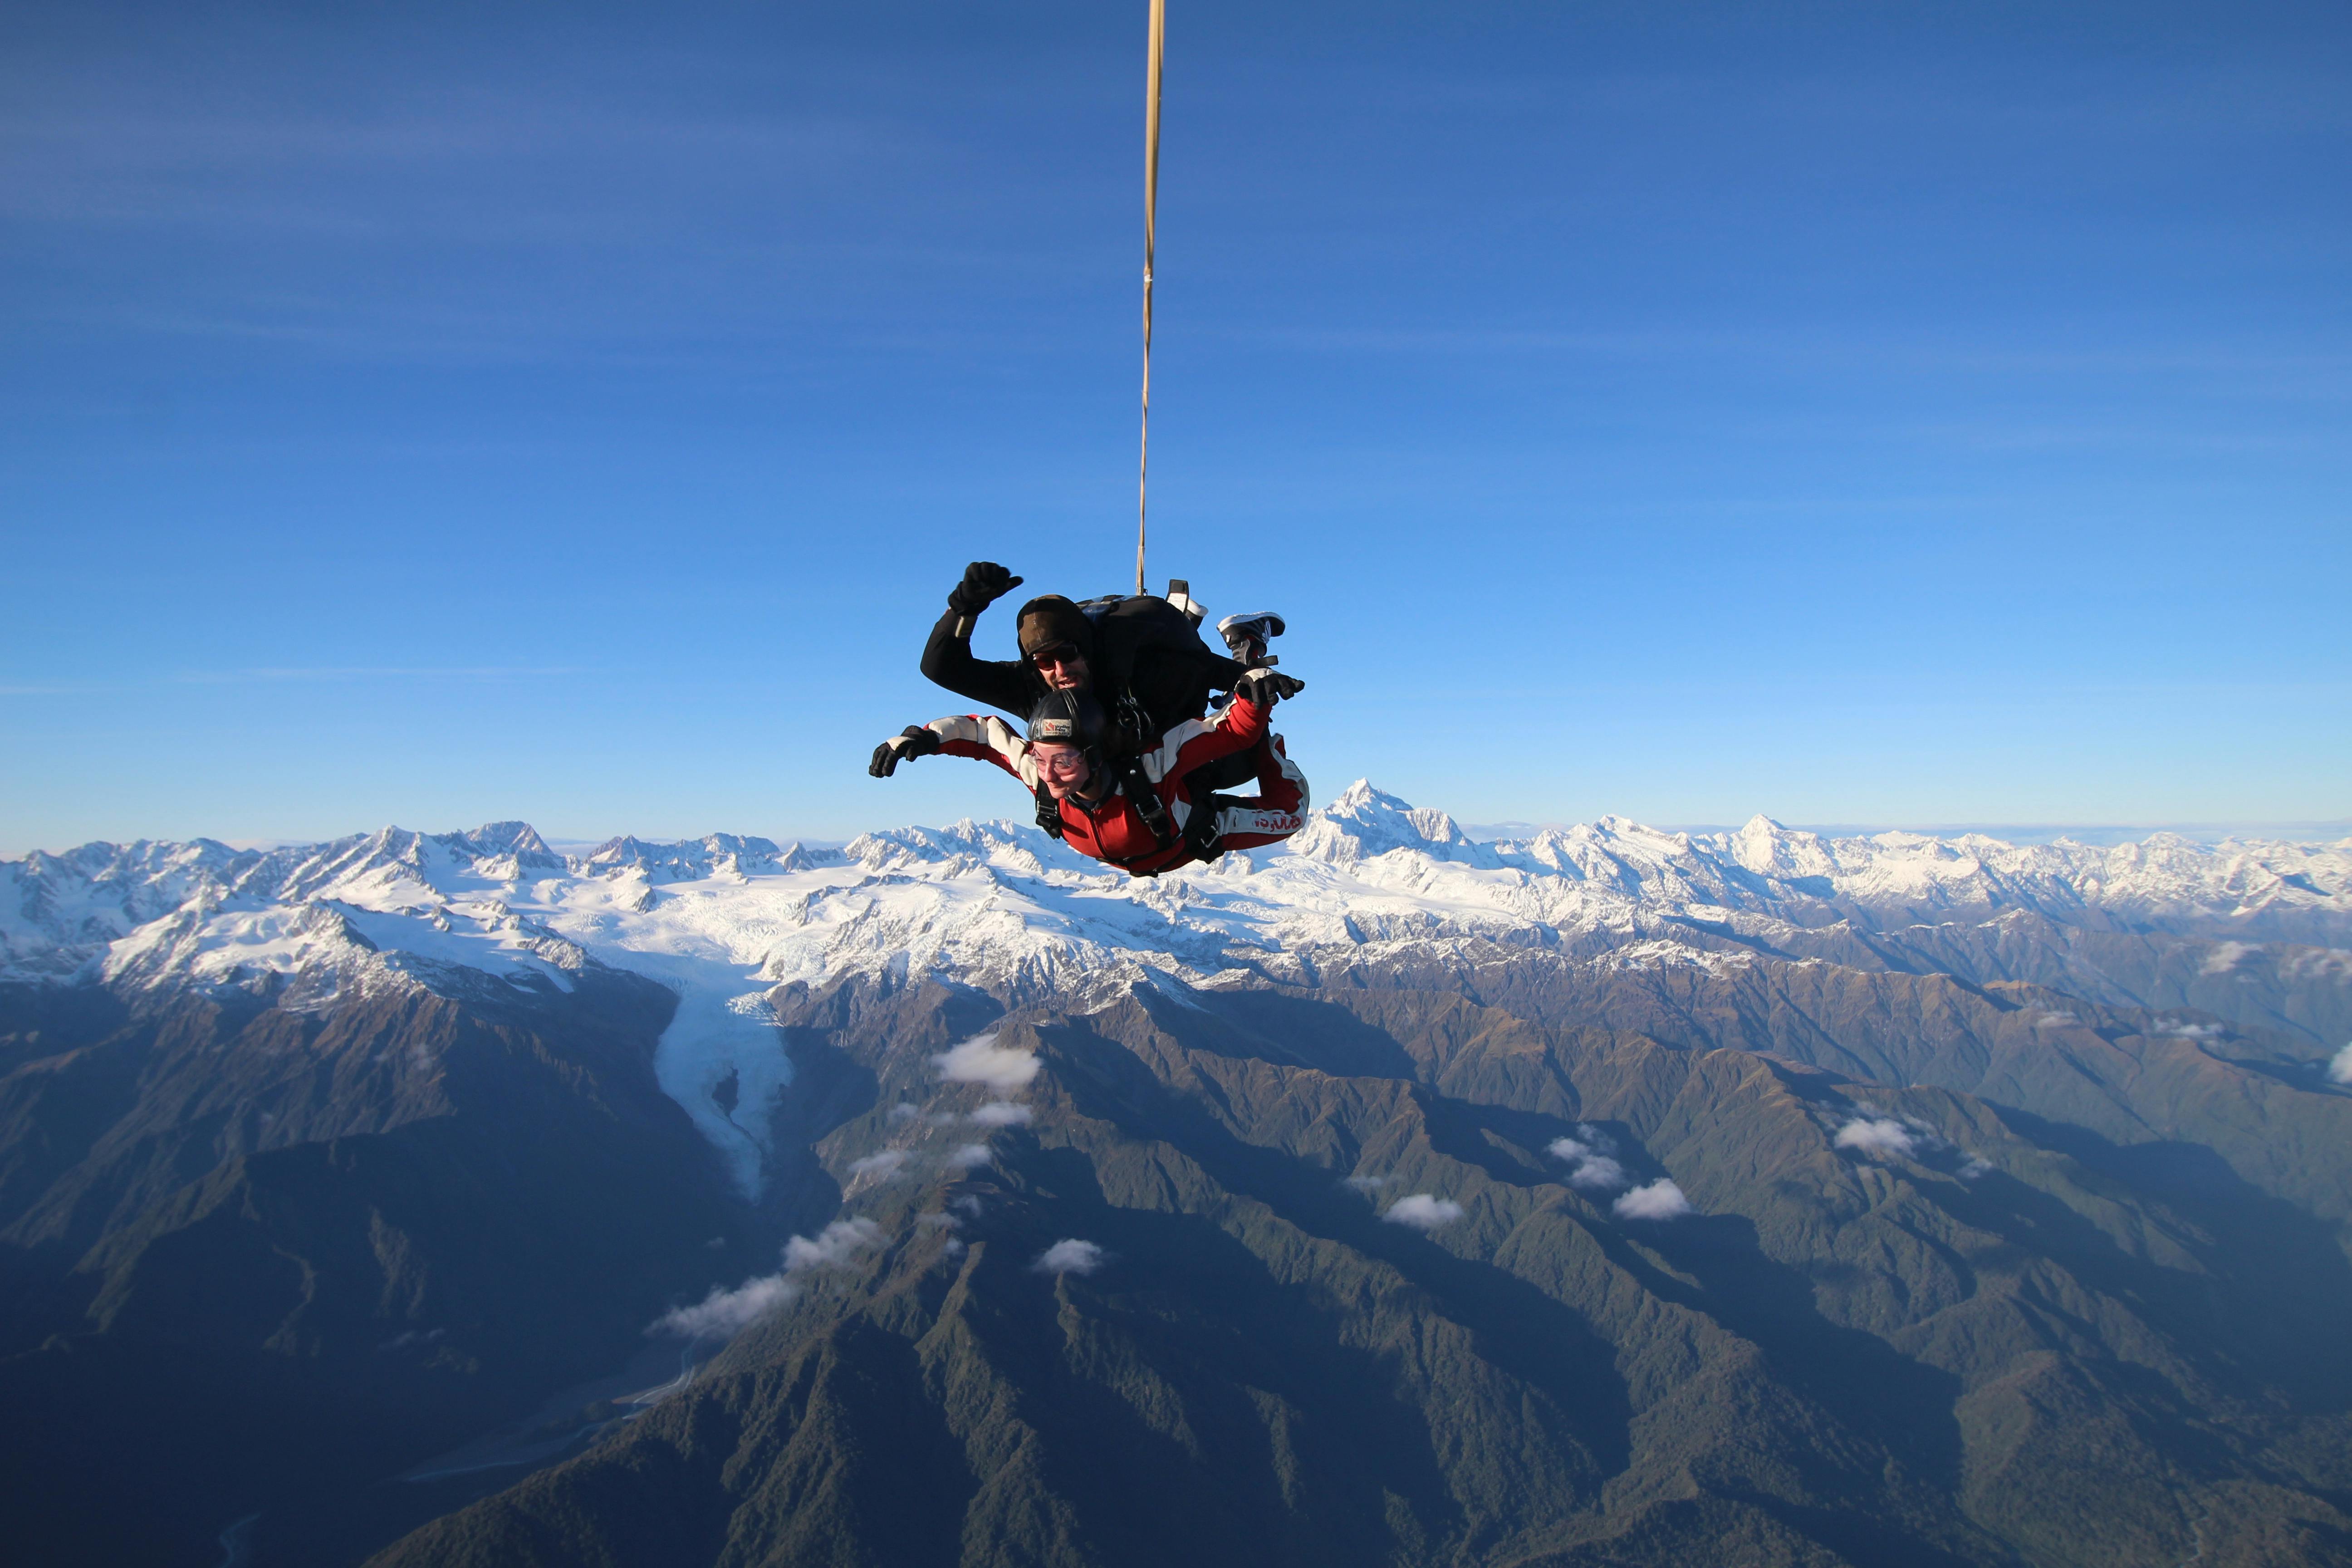 Tandem skydive 13,000ft above Franz Josef and Fox Glaciers